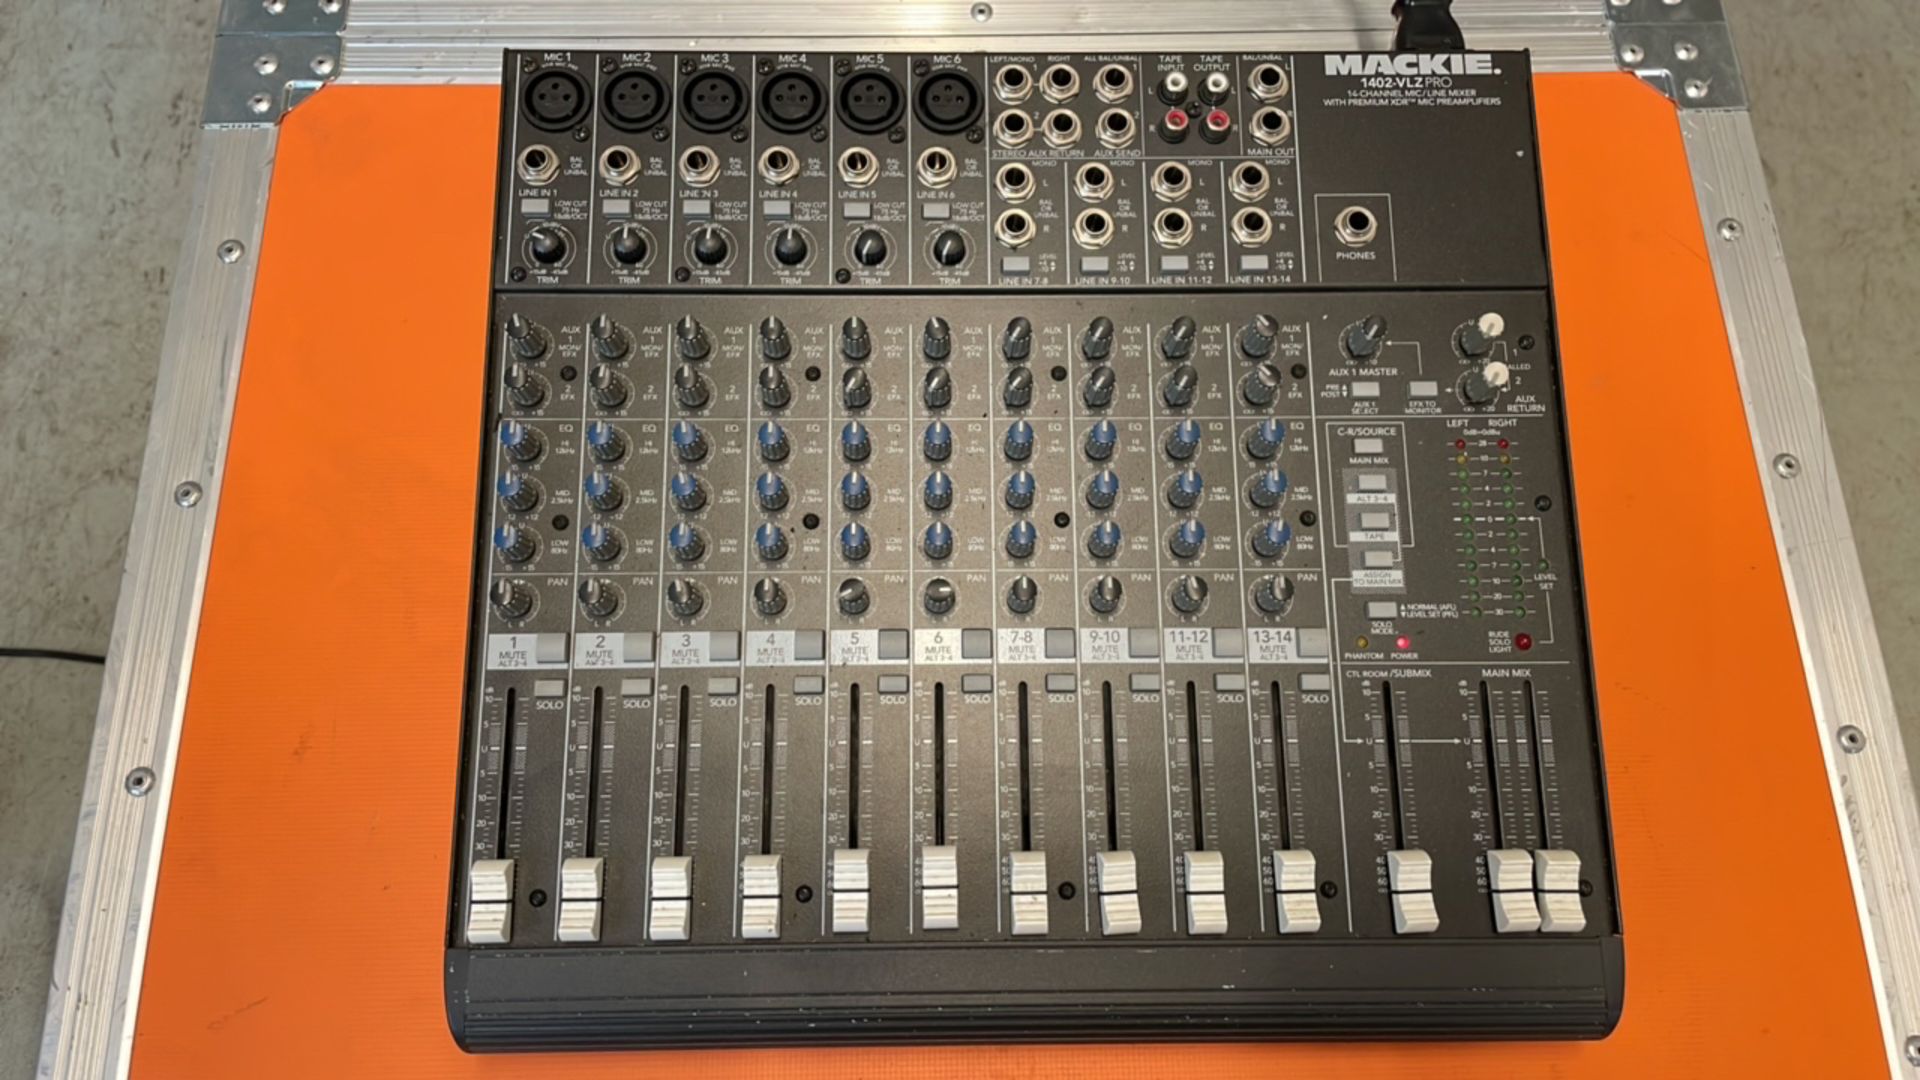 Mackie 1402-VLZ Pro mixer